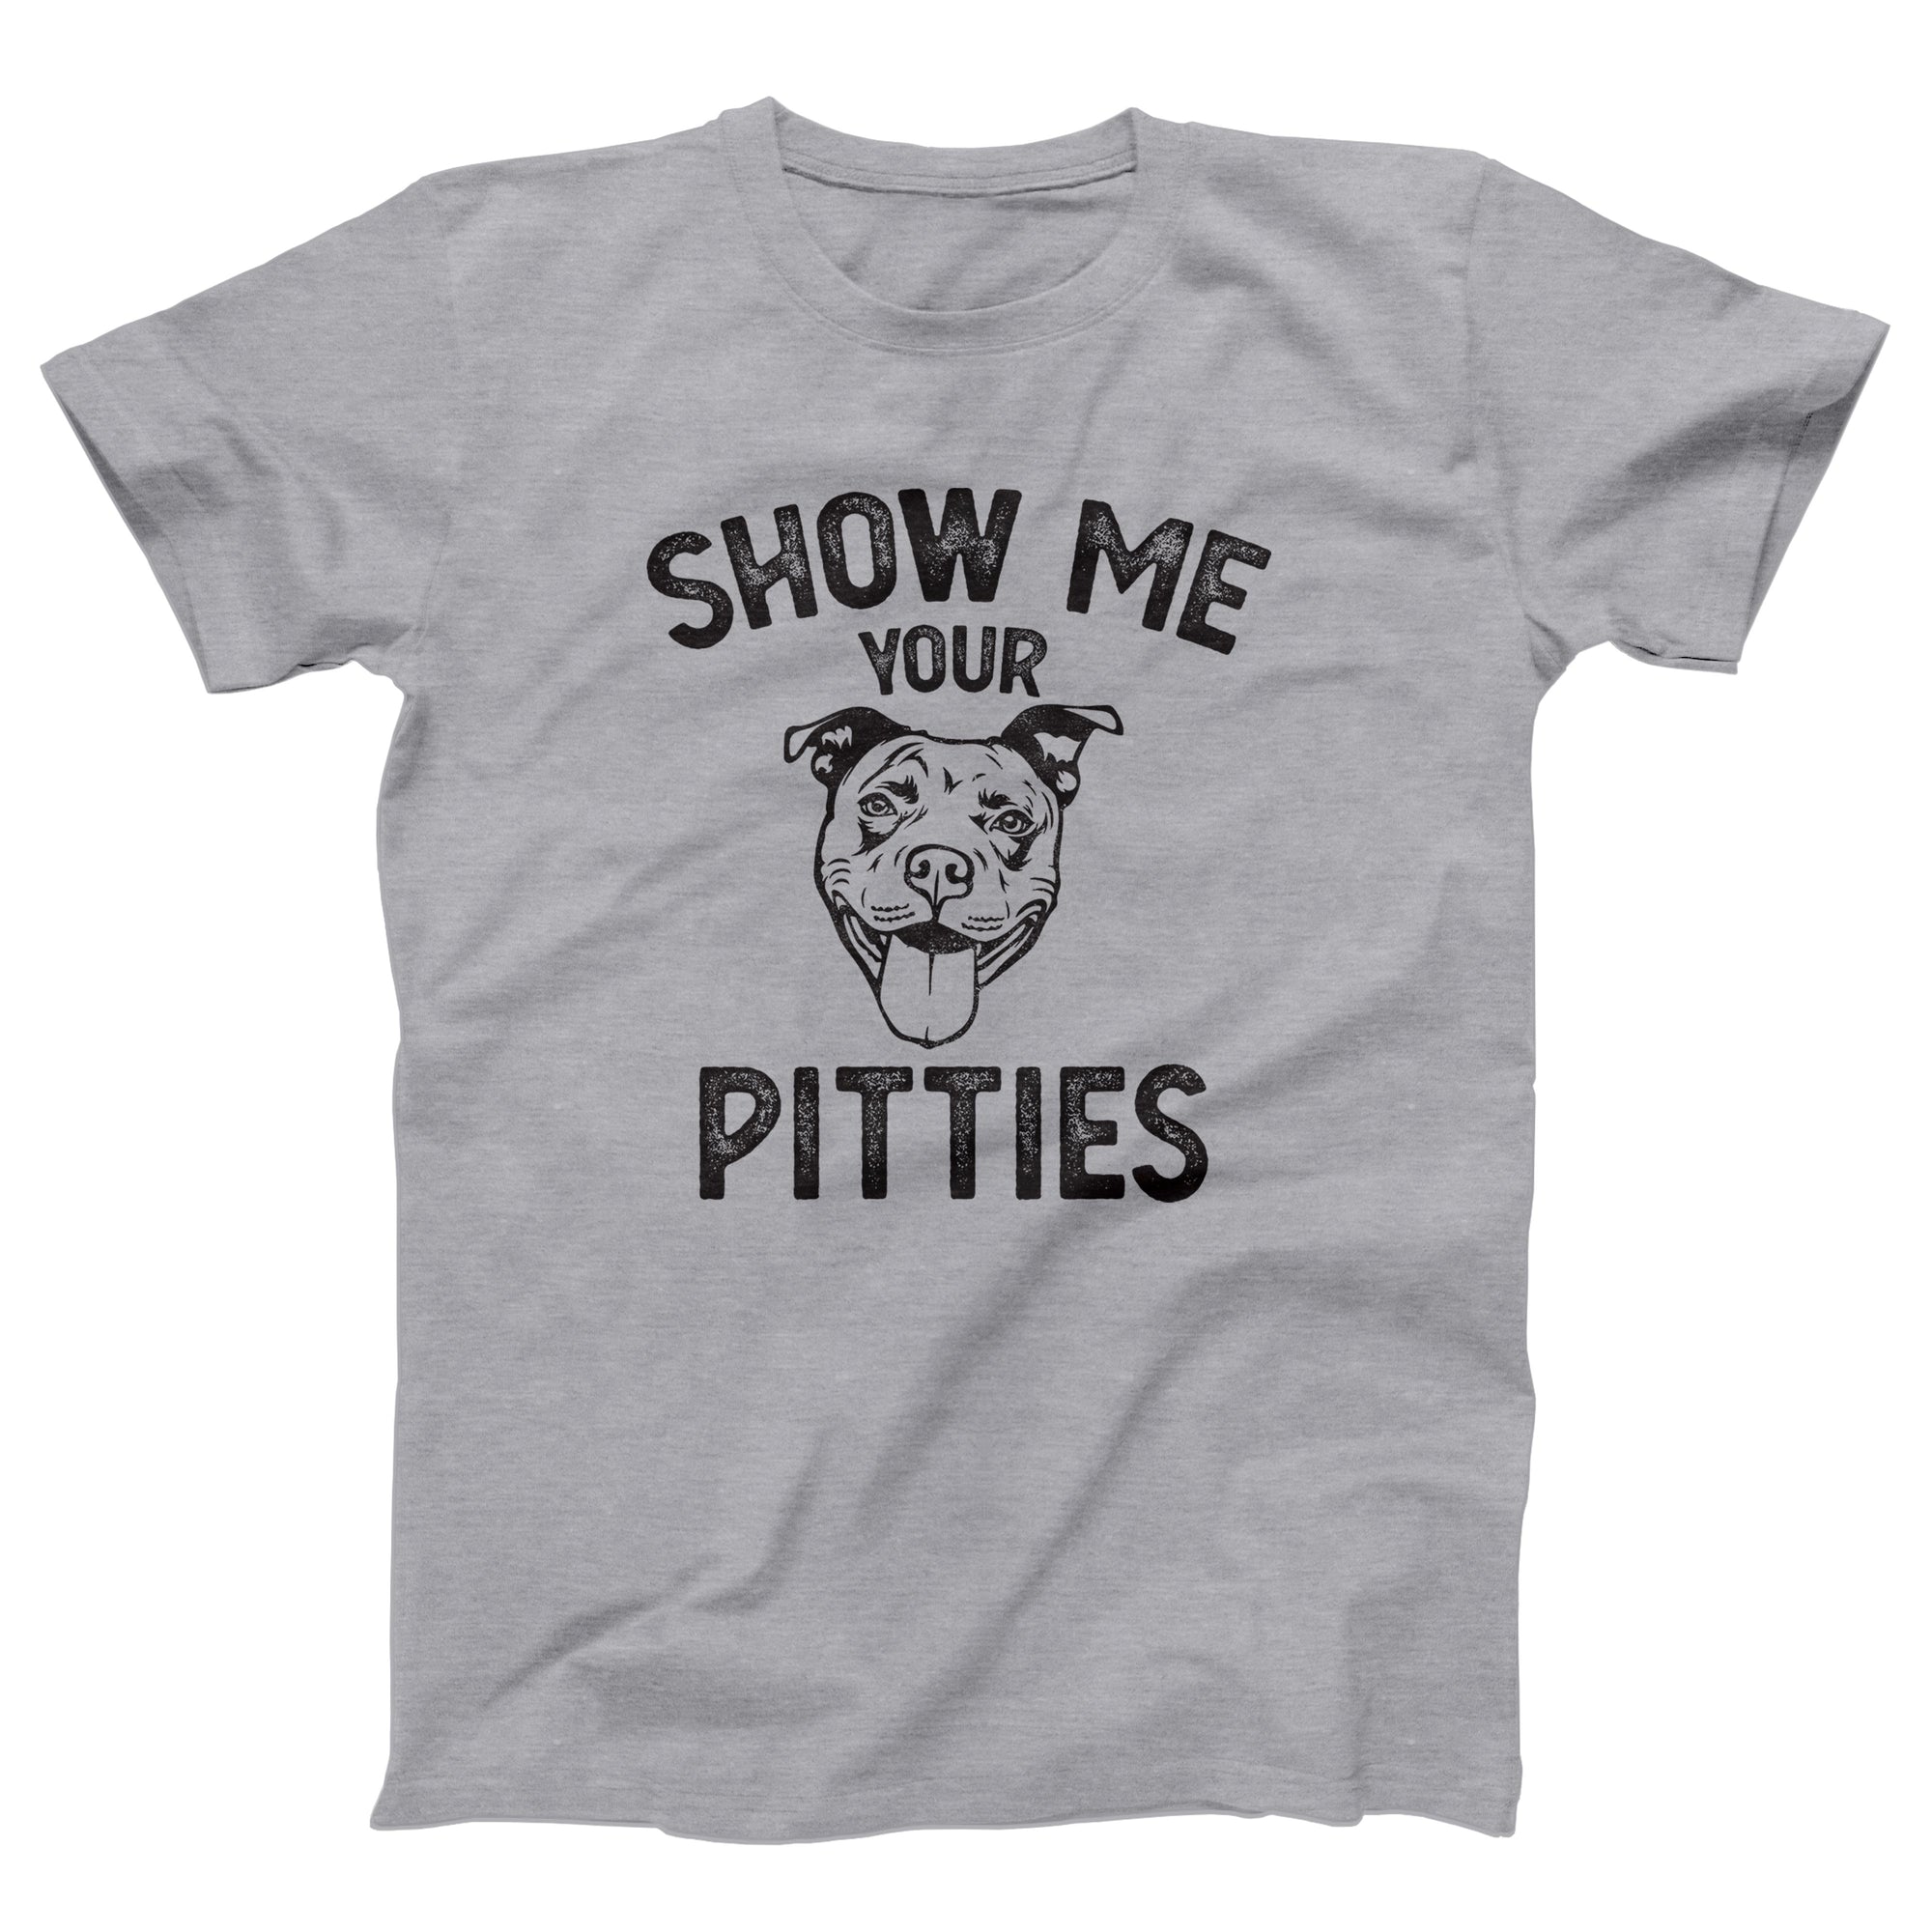 Show Me Your Pitties Adult Unisex T-Shirt - anishphilip